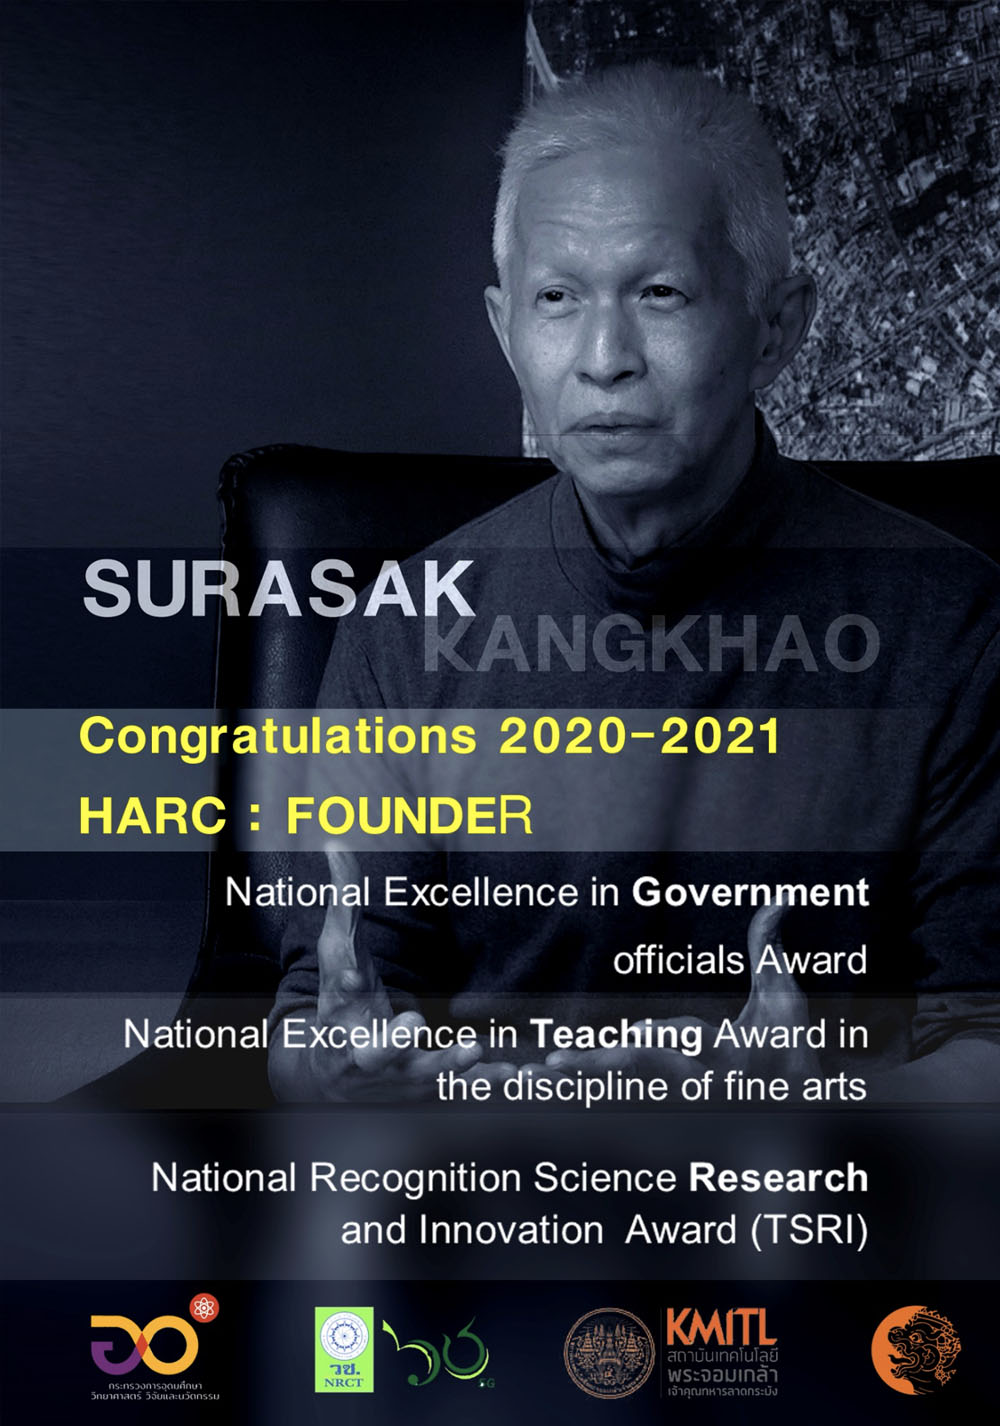 Congratulations-SURASAK KANGKHAO